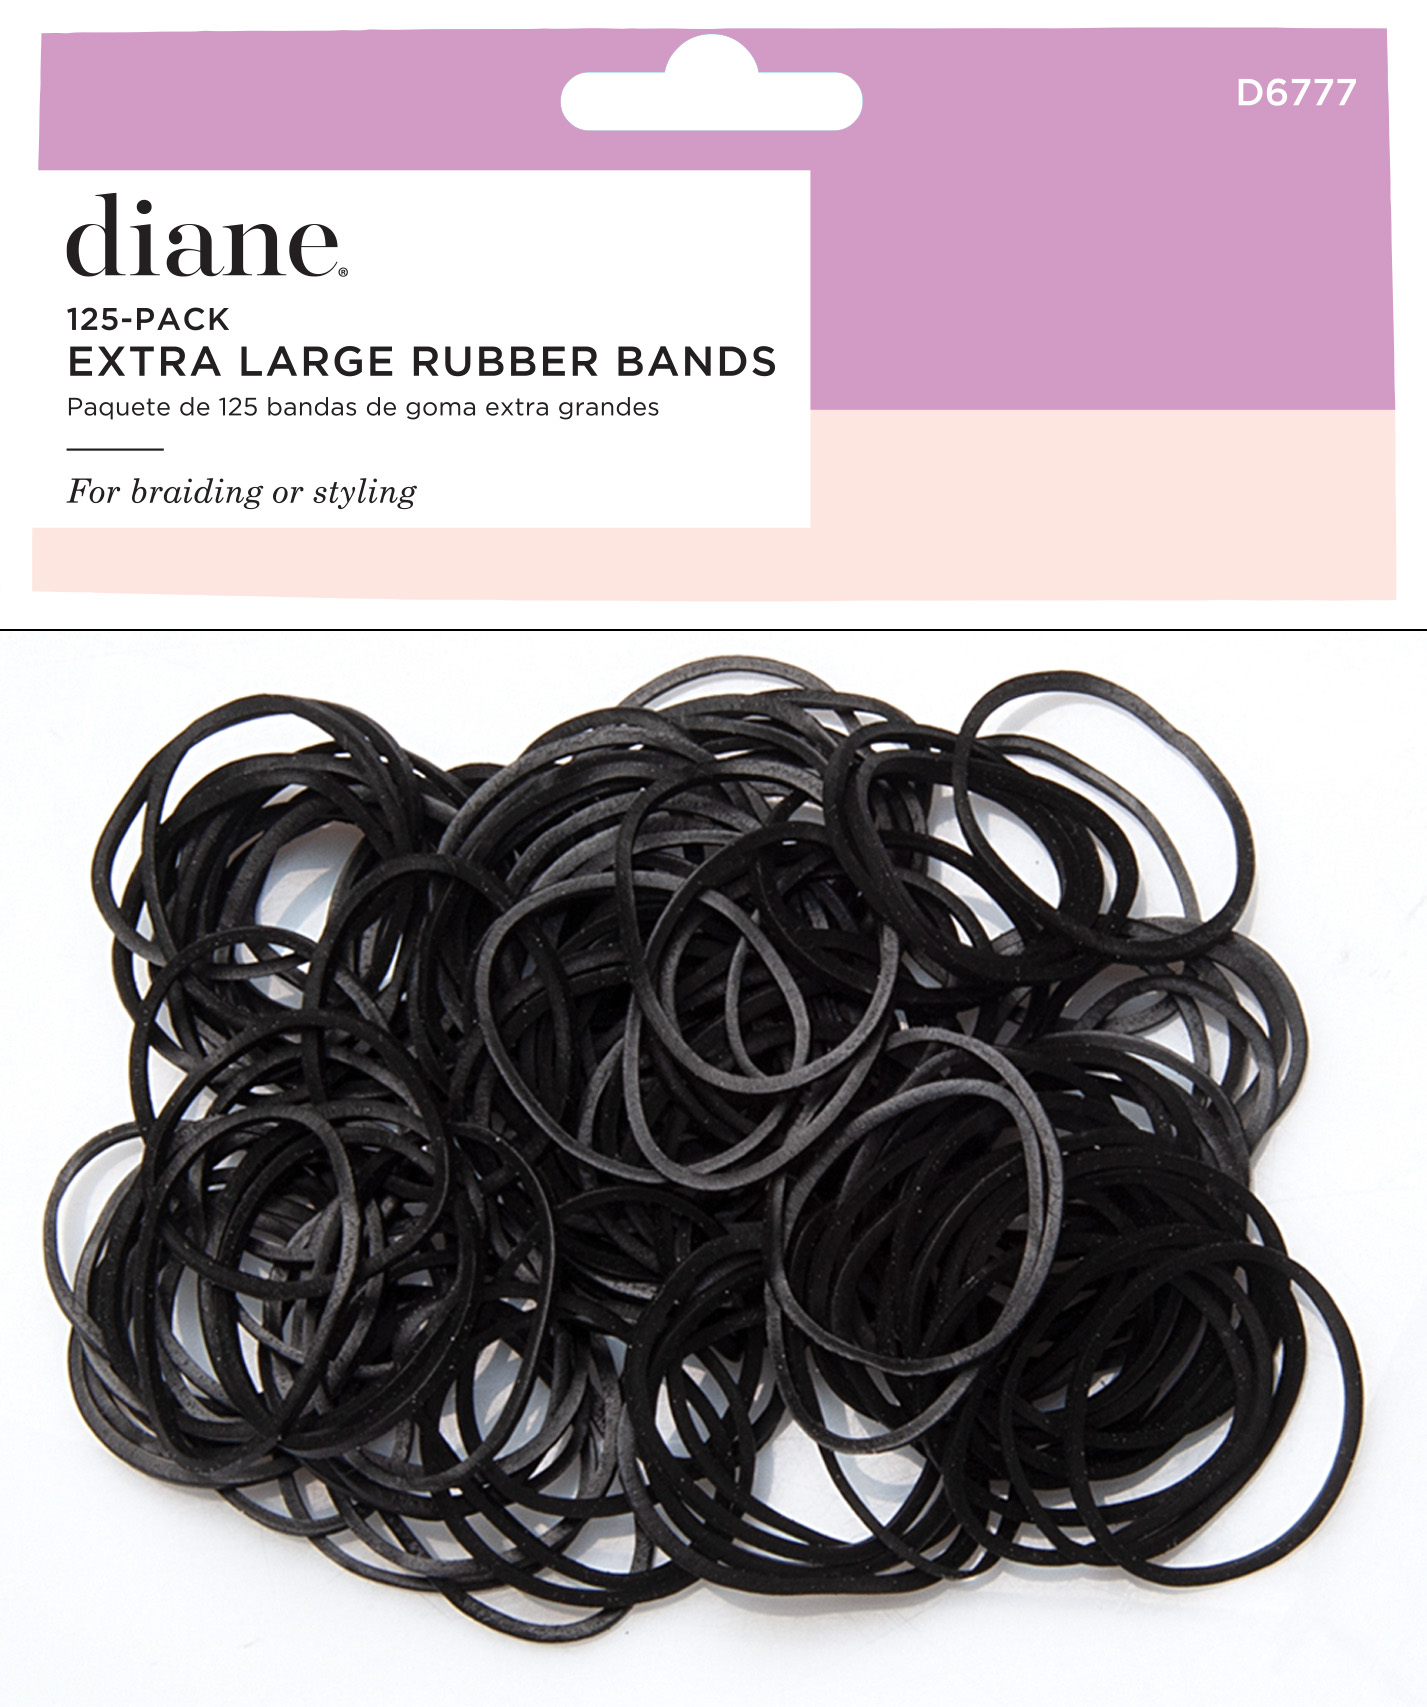 Diane D6777 XL RUBBER BANDS BLK 125PK UPC # 824703027696